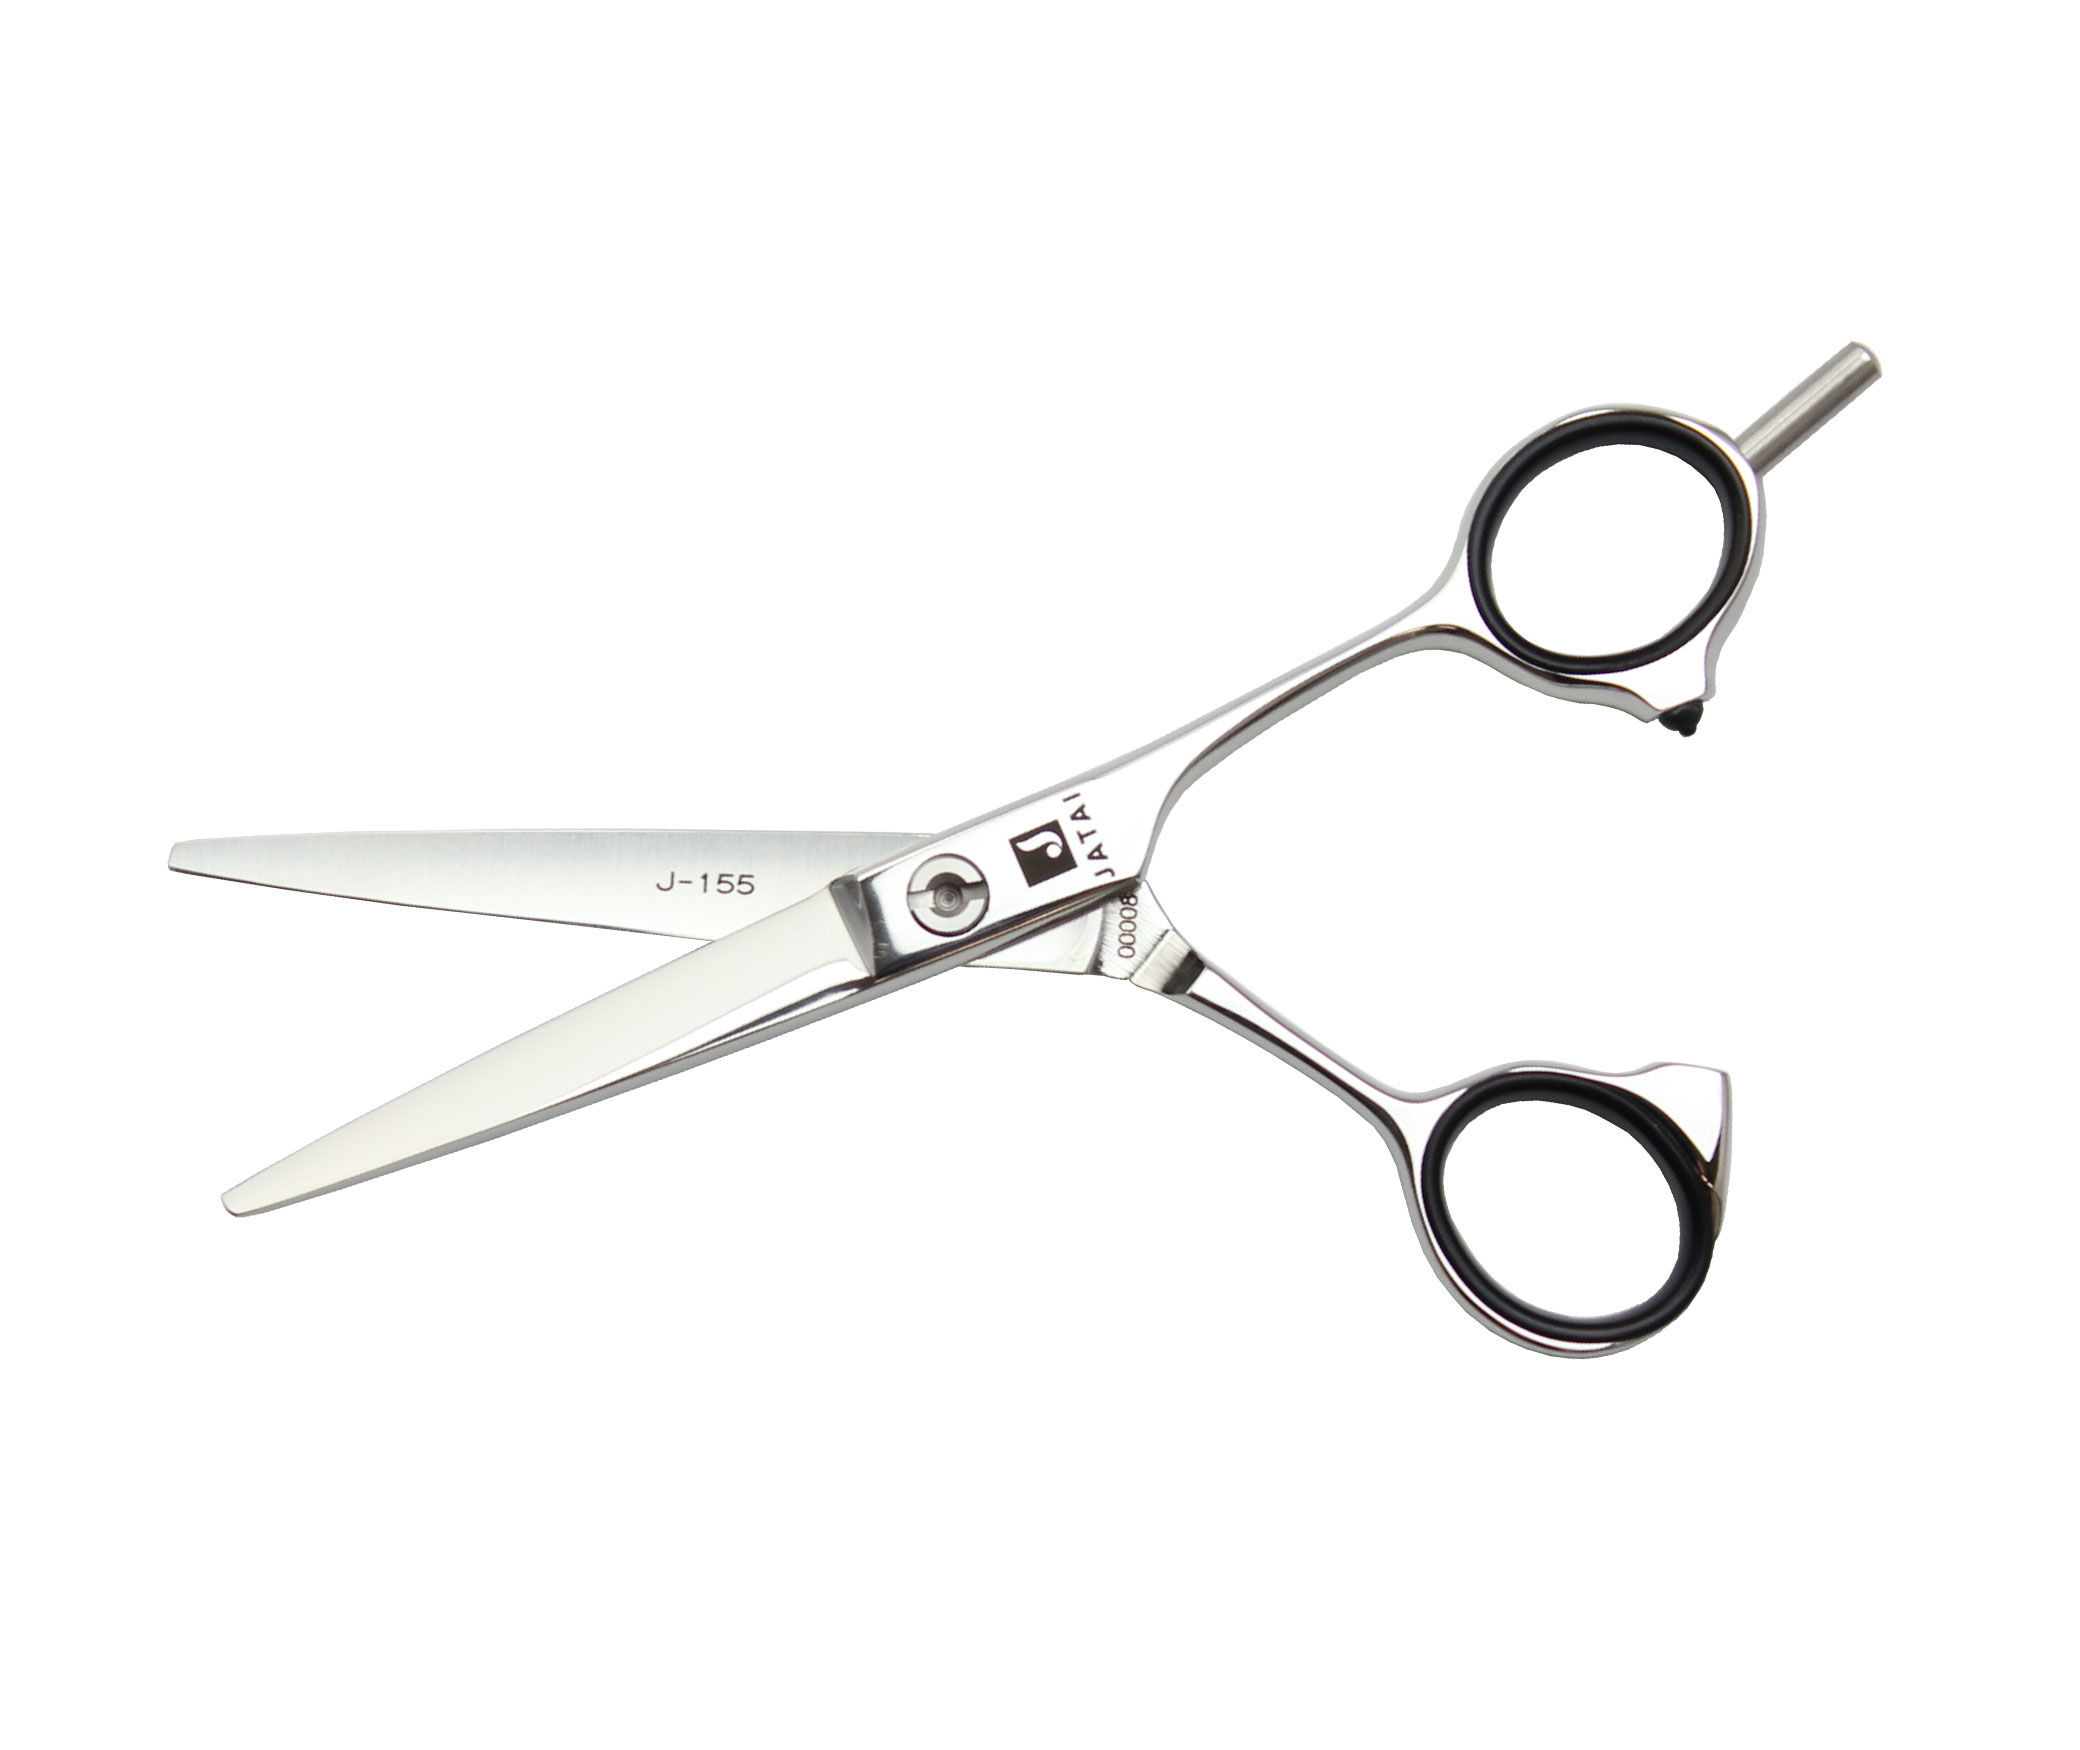 JATAI Tokyo Scissors 5.5 (J-155) offset